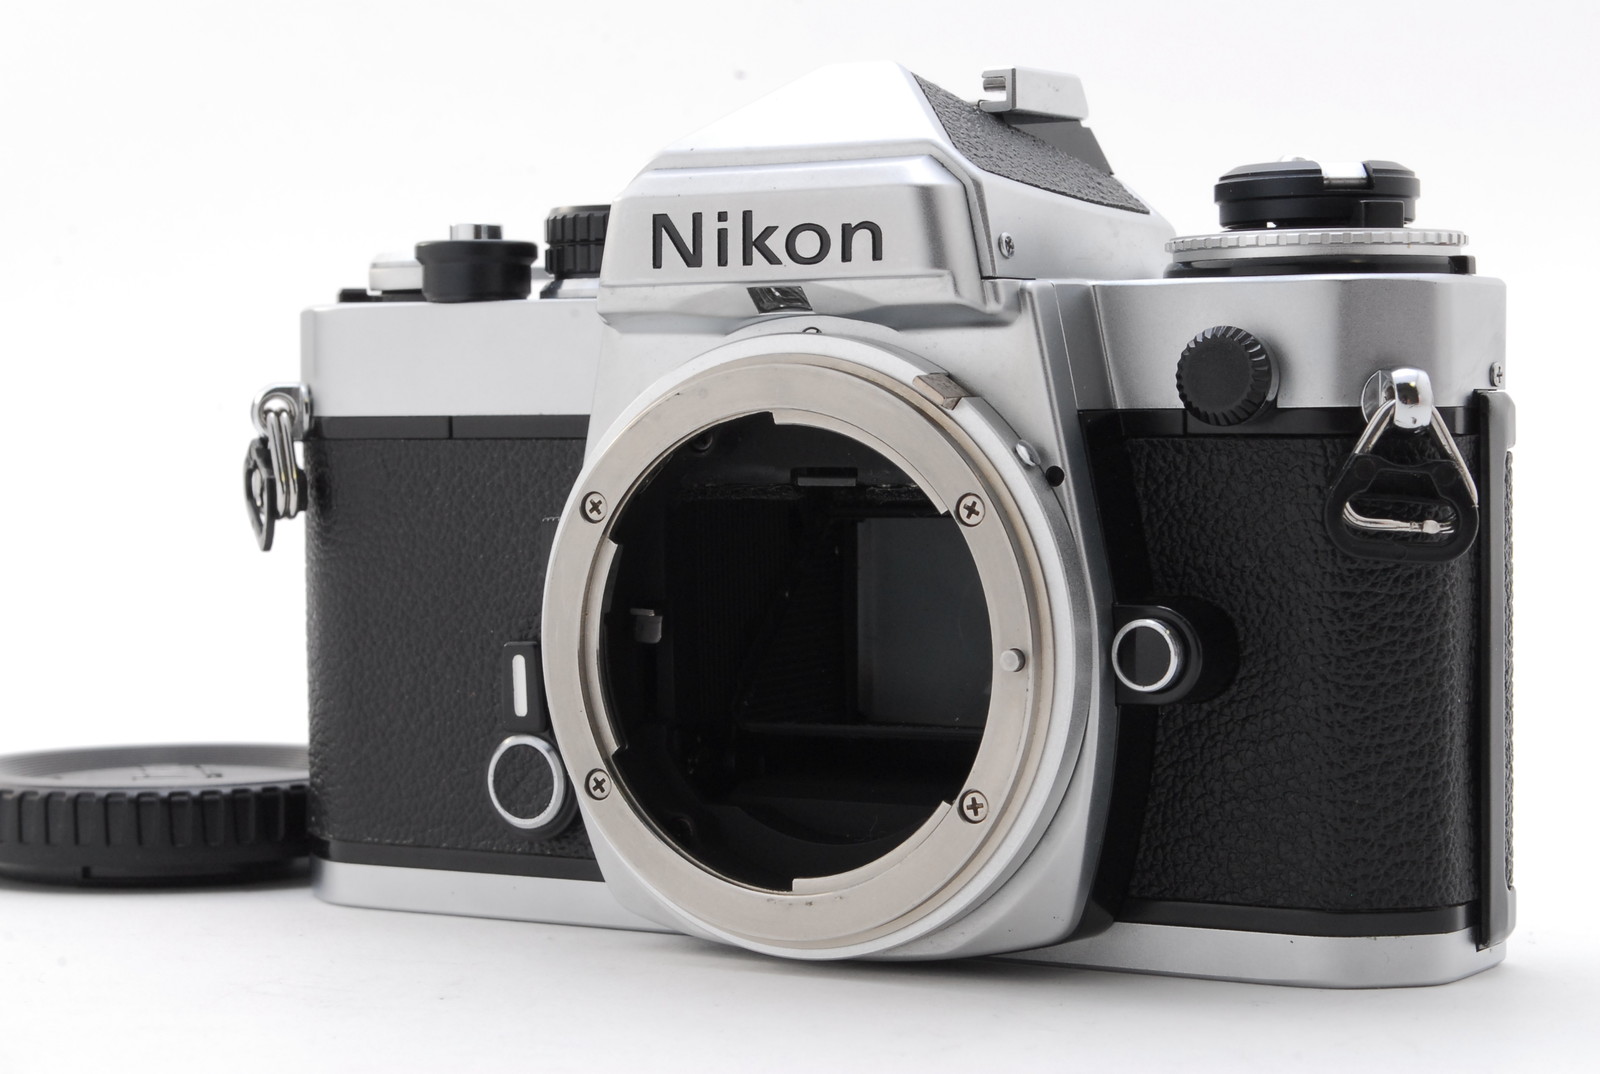 PROMOTION. NEAR MINT Nikon FE 35mm SLR Film Camera Silver Body, Body Cap from Japan